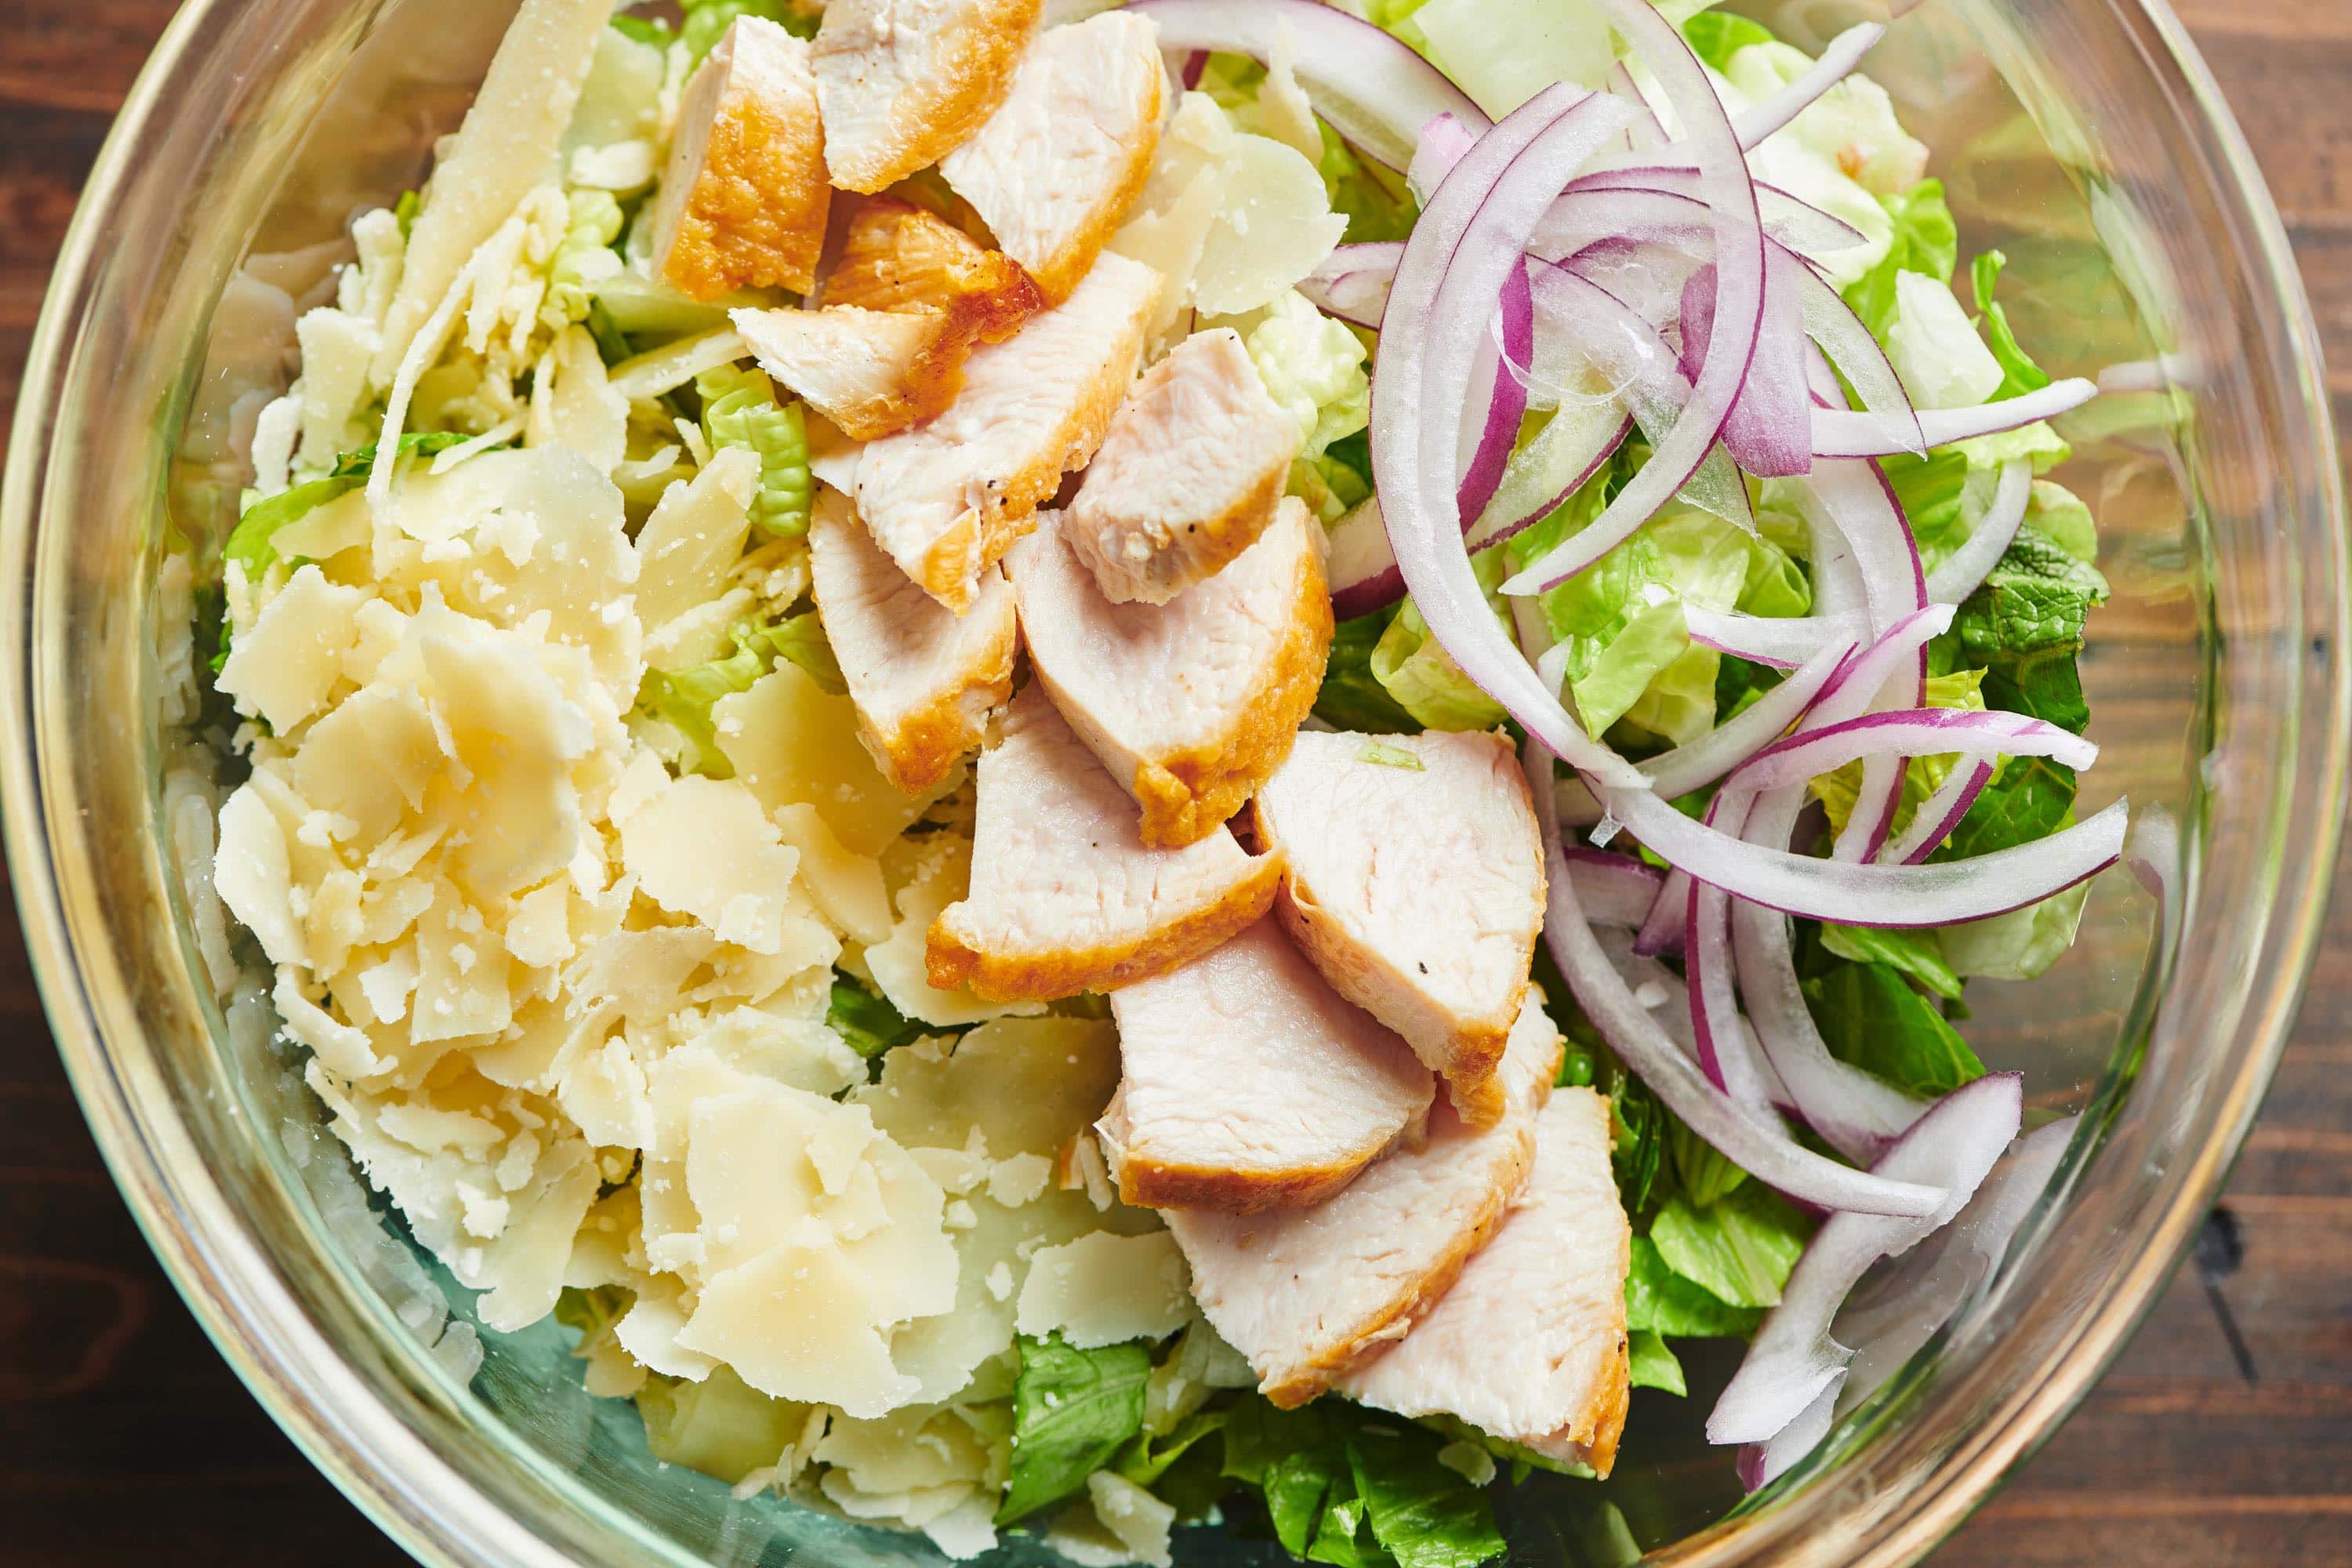 Ingredients for Chicken Caesar Salad in a bowl.